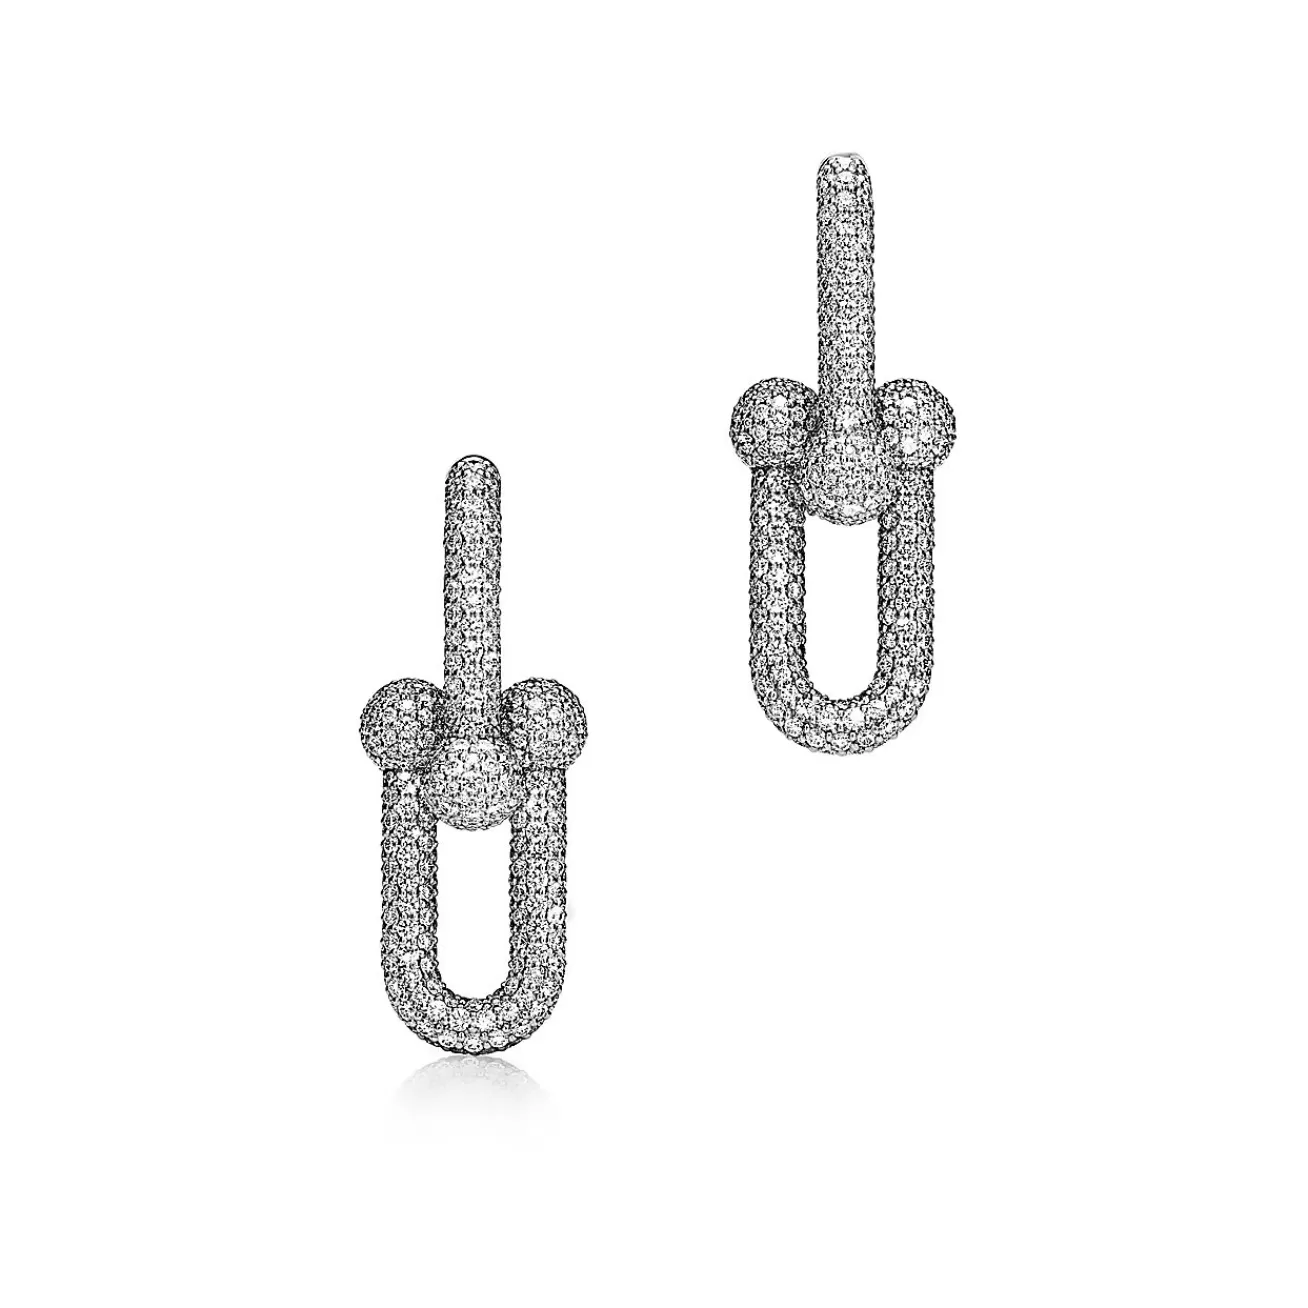 Tiffany & Co. Tiffany HardWear Large Link Earrings in White Gold with Pavé Diamonds | ^ Earrings | New Jewelry